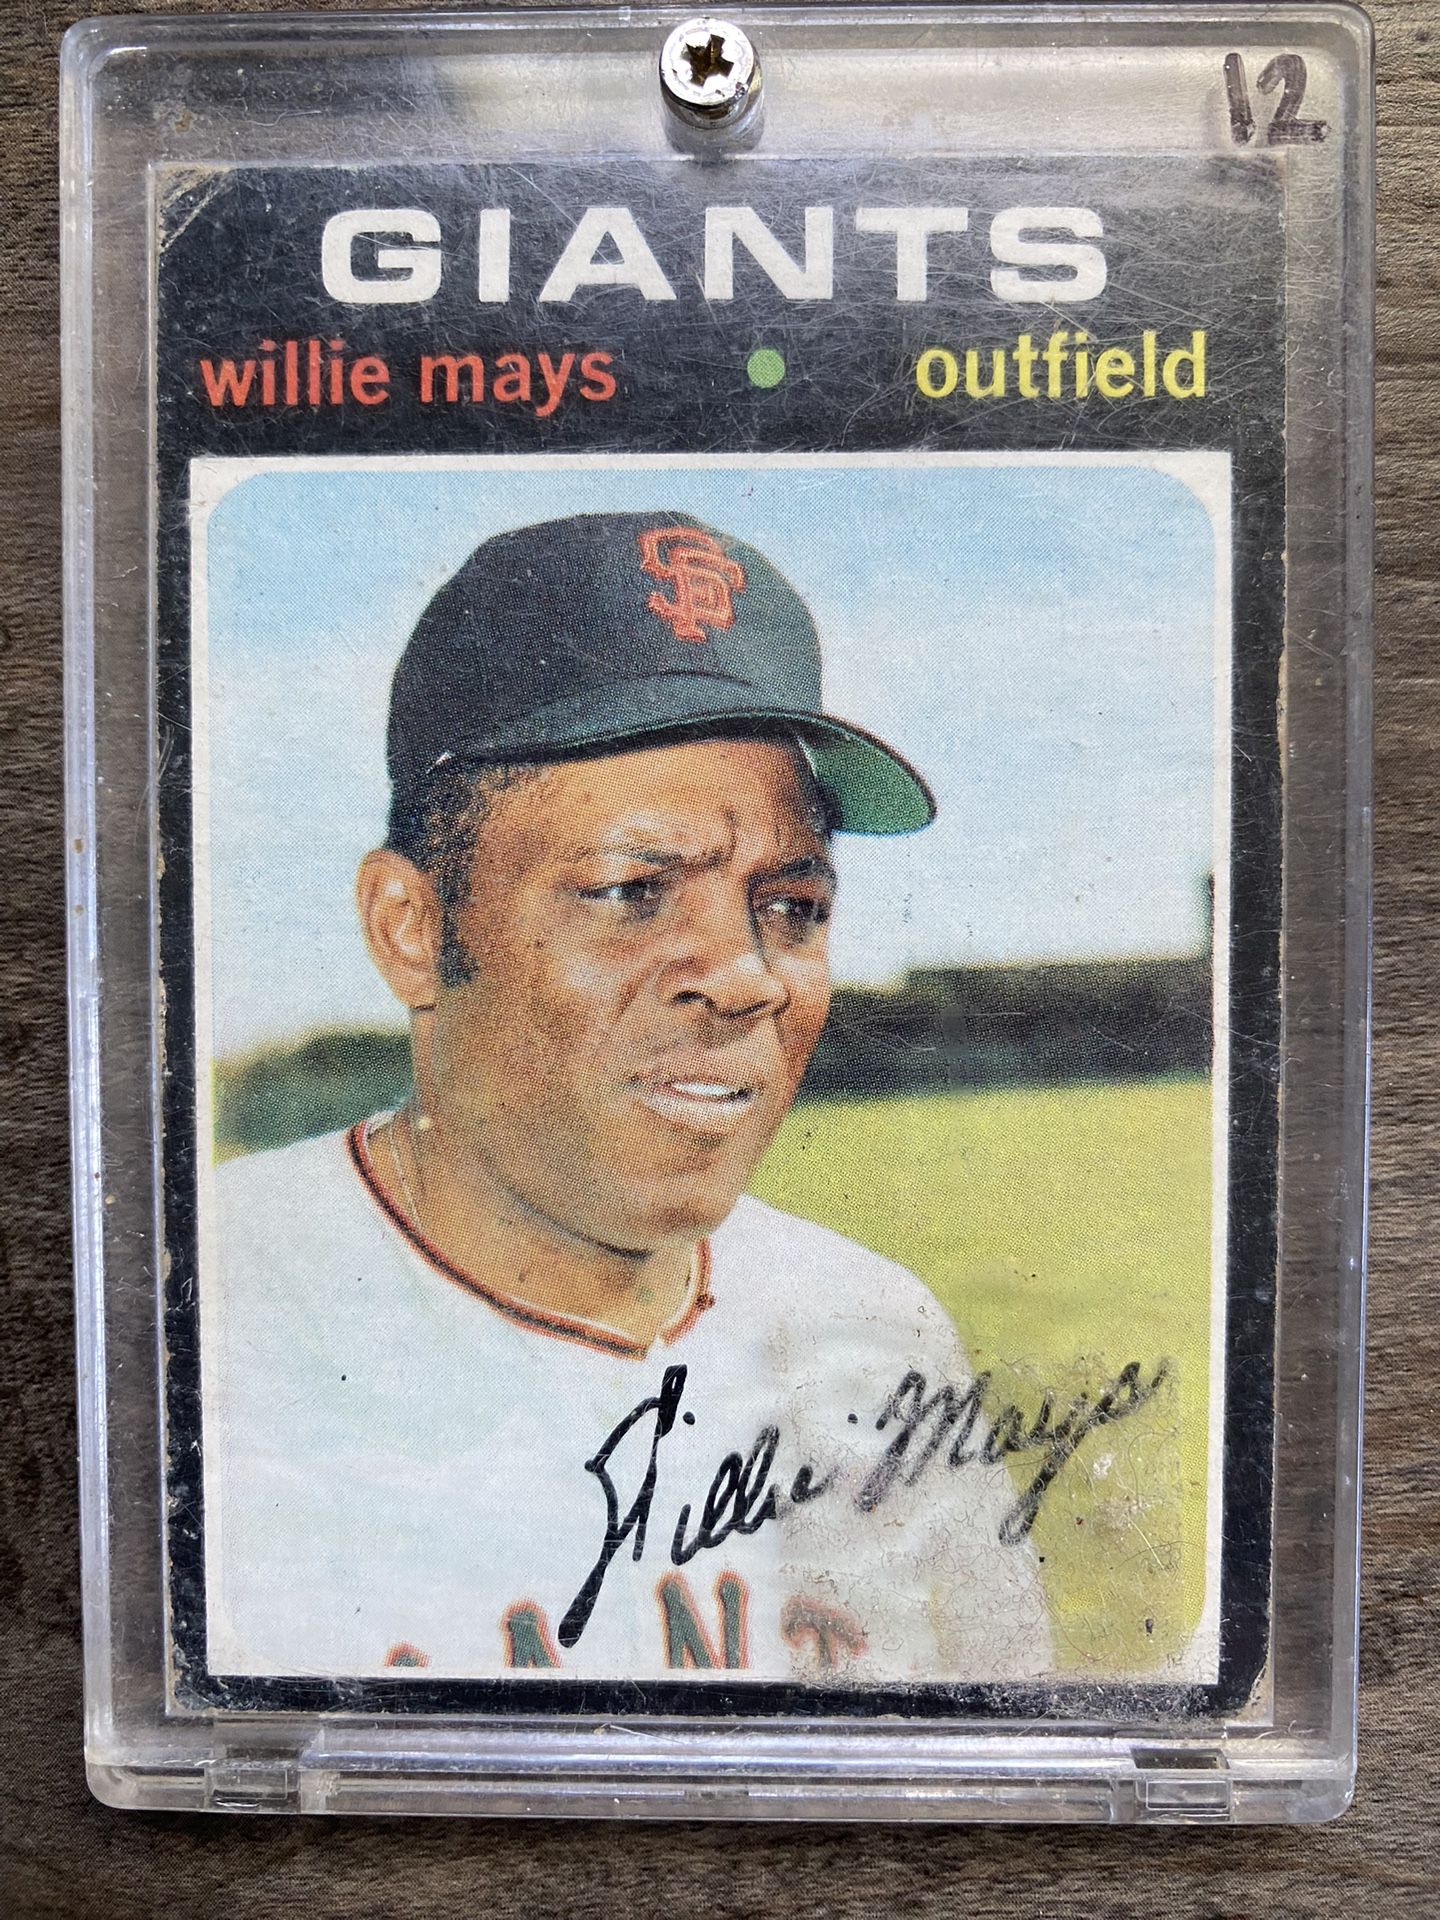 1971 Willie Mays Card #600